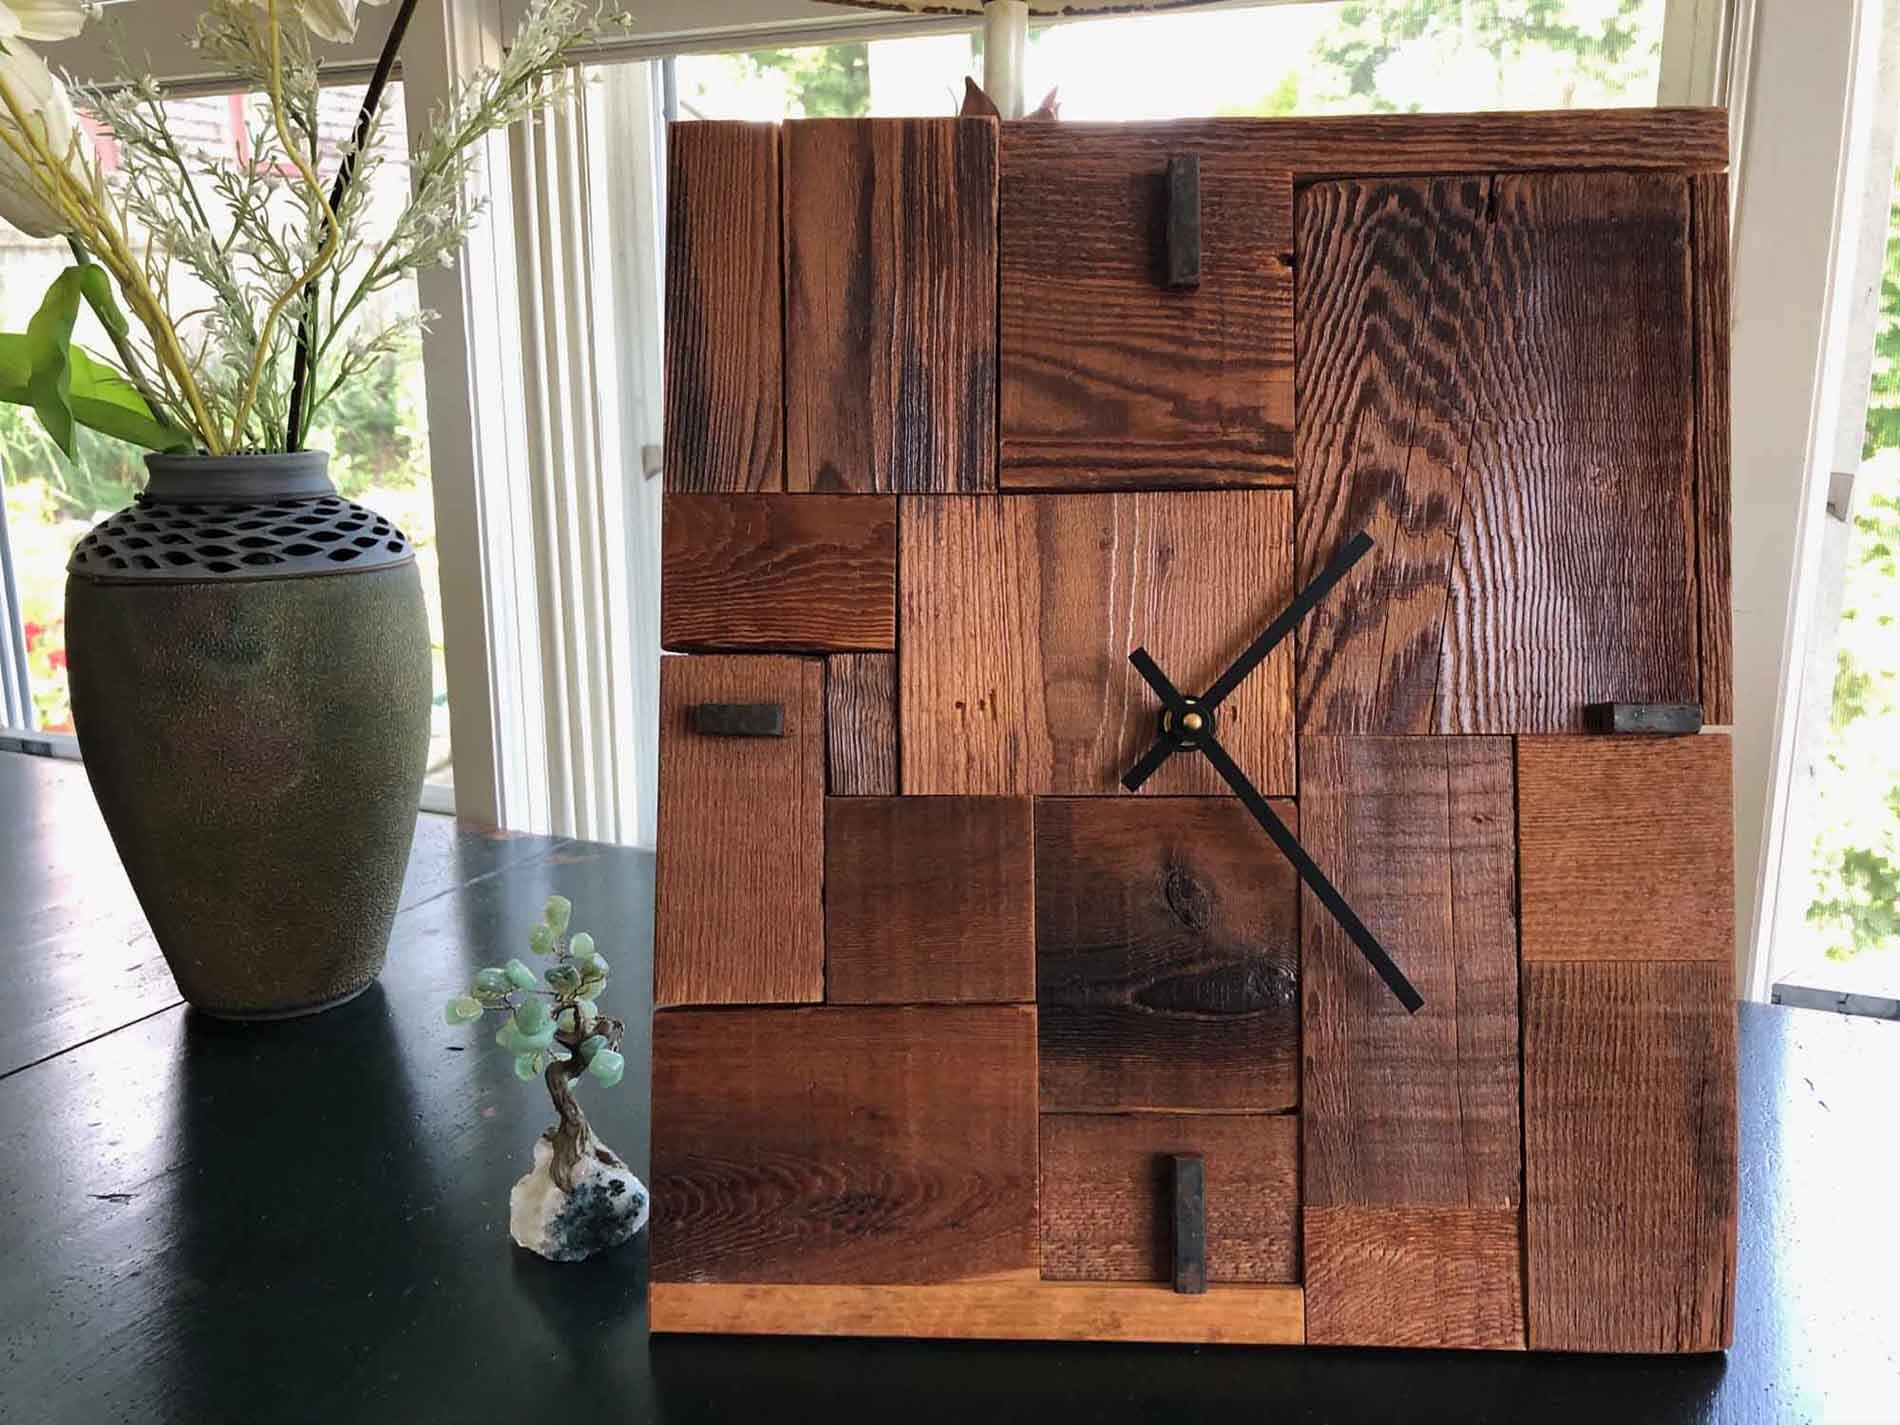 Clock from Reclaimed Lumber